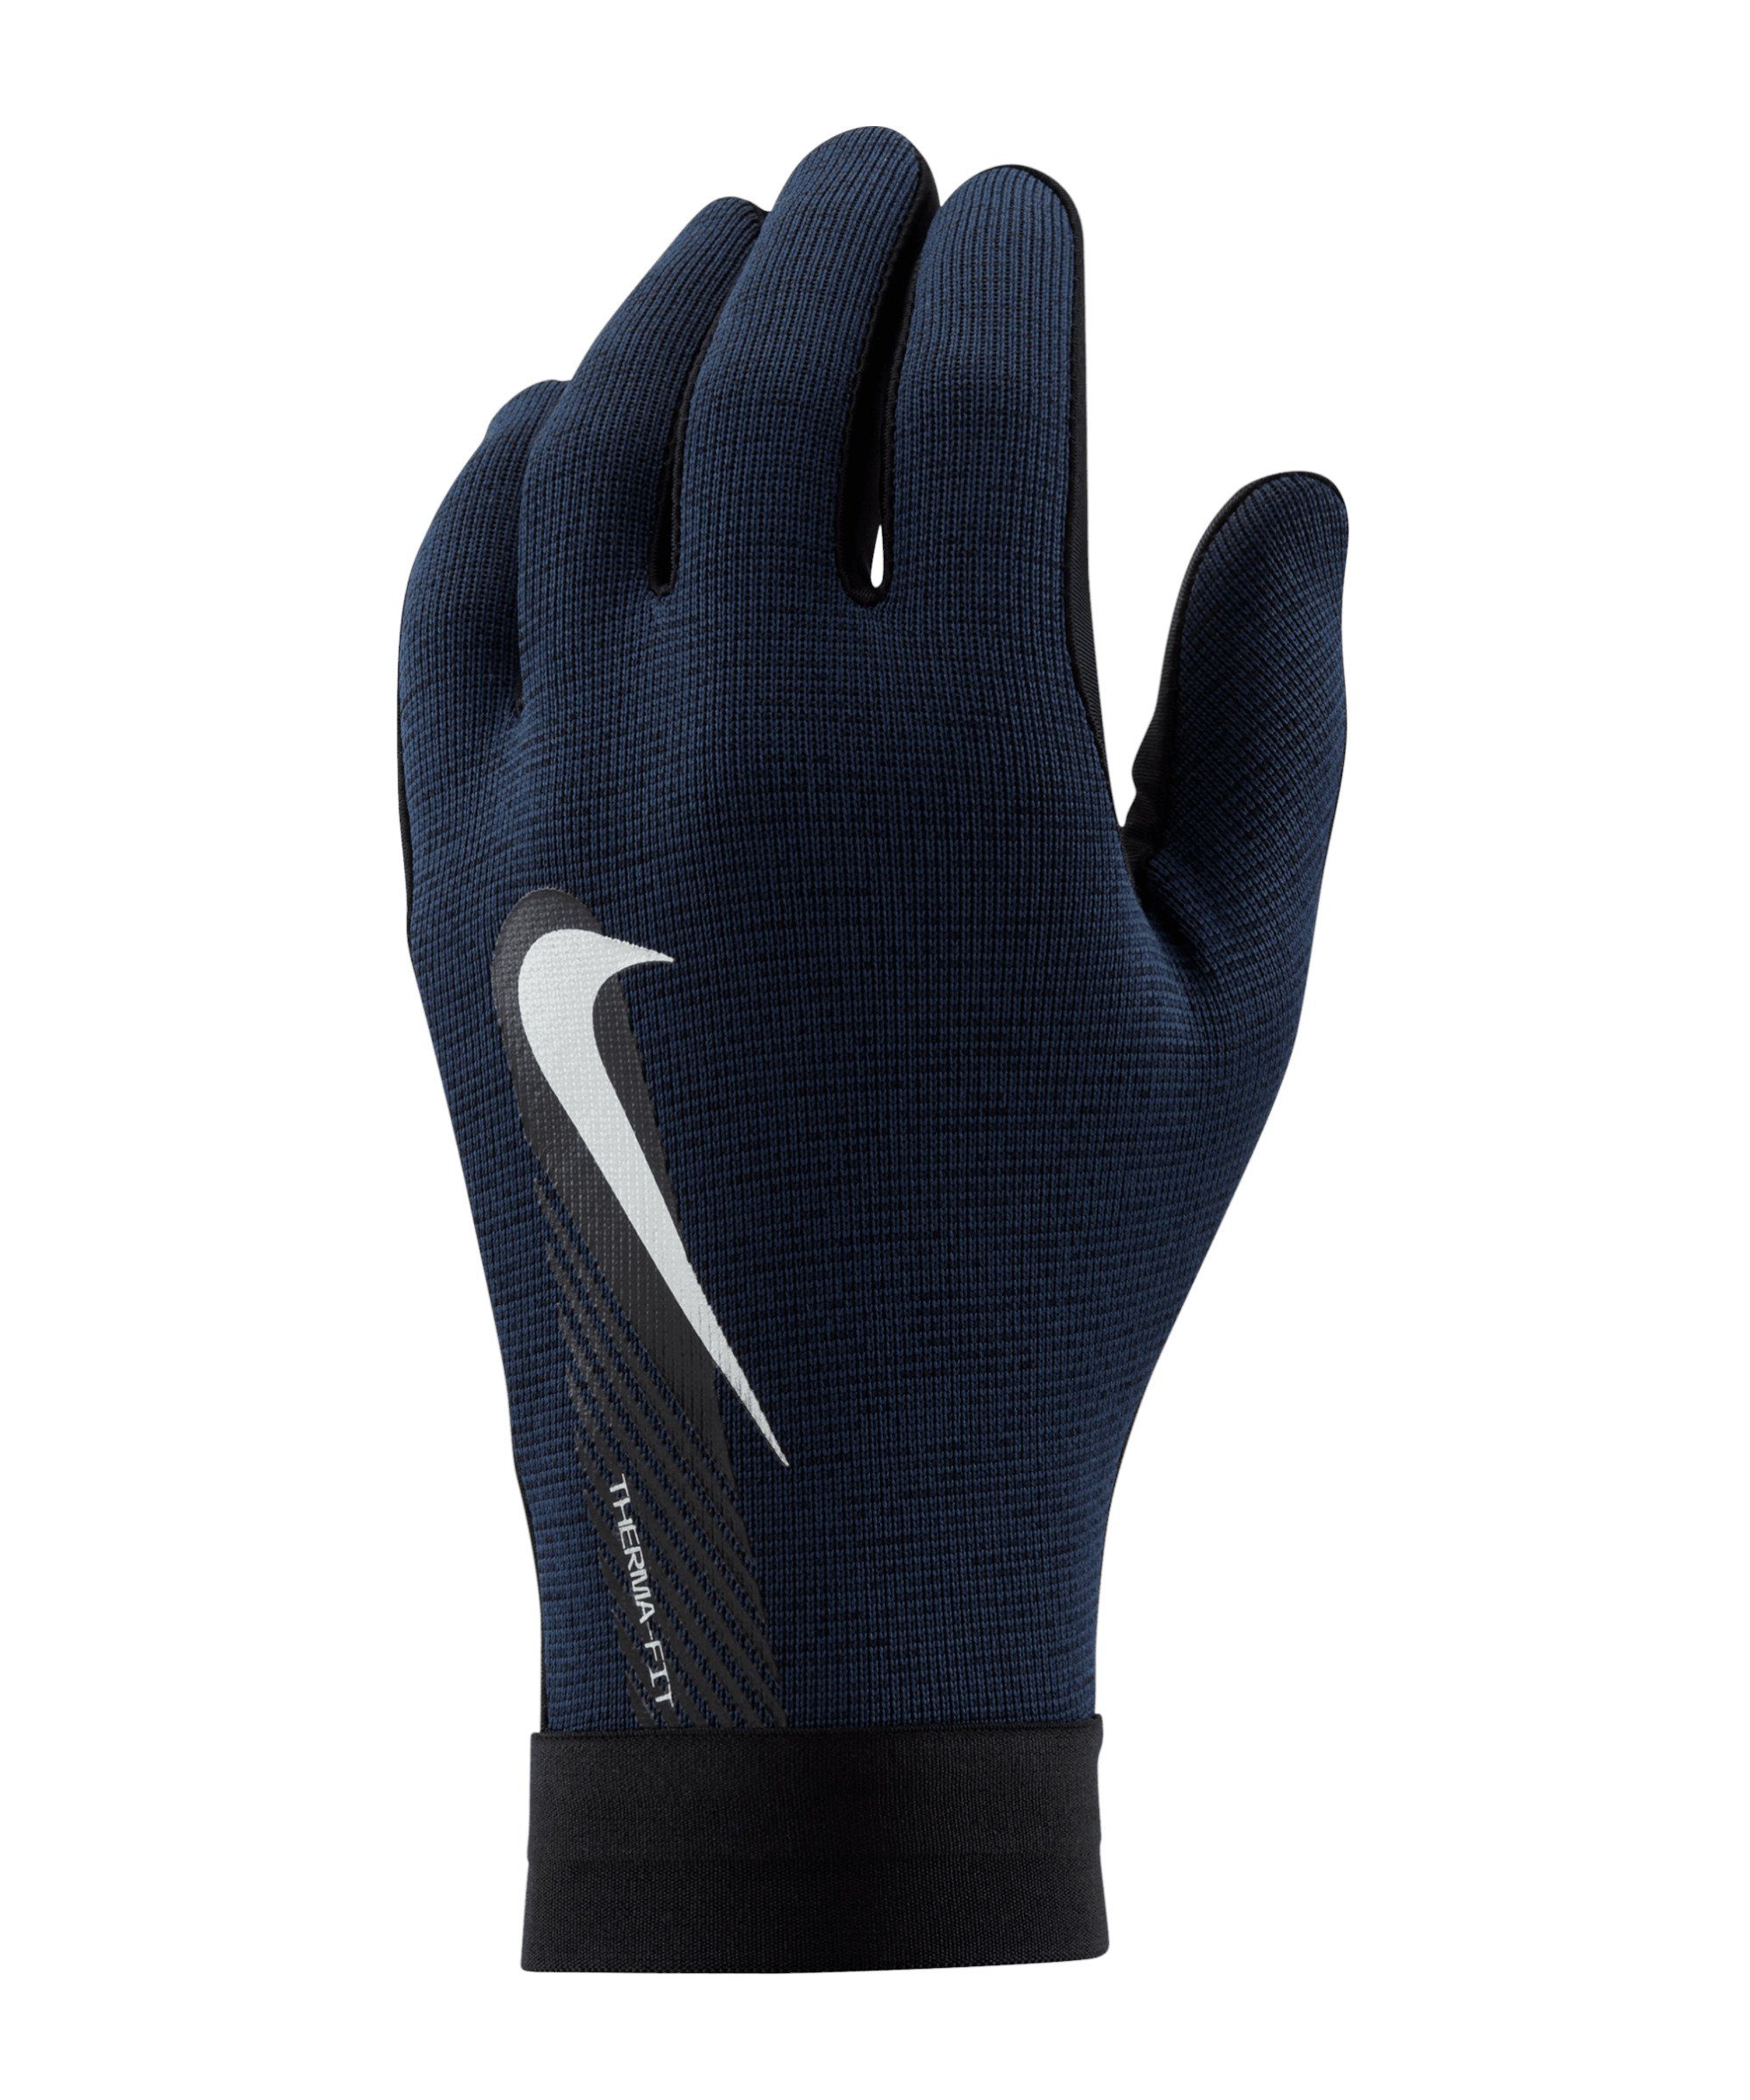 Kids Nike Therma-FIT Academy Feldspielerhandschuhe schwarzblau Spielerhandschuh